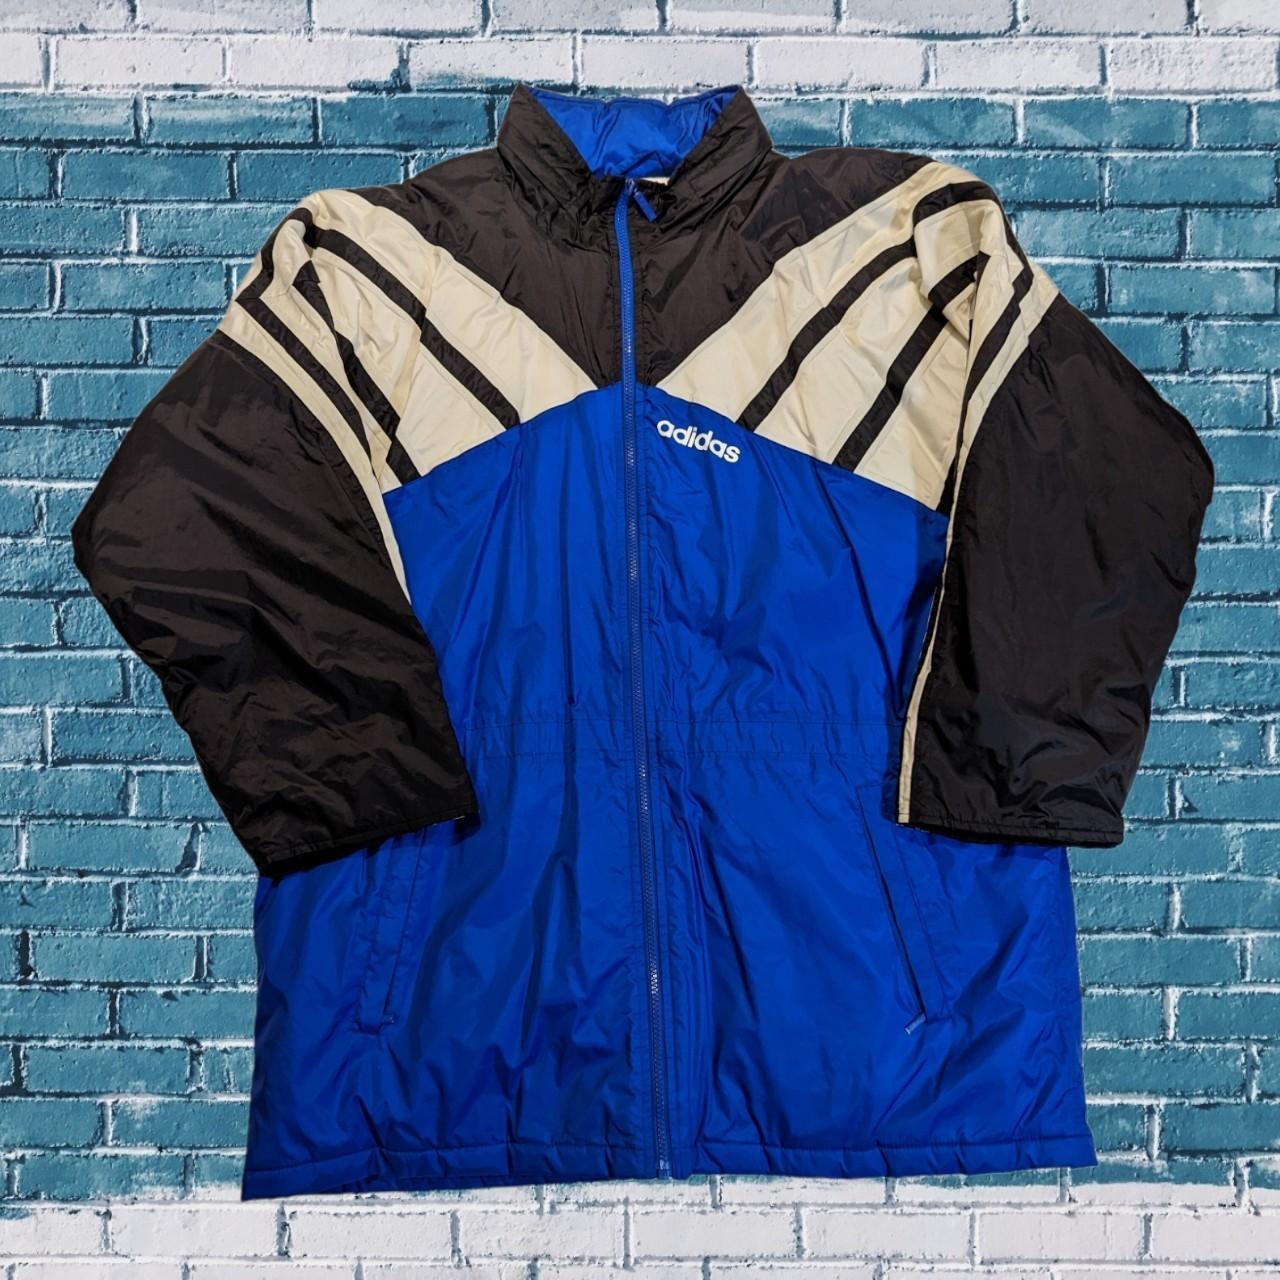 Vintage 90s Adidas rain coat size XL Blue and black... - Depop